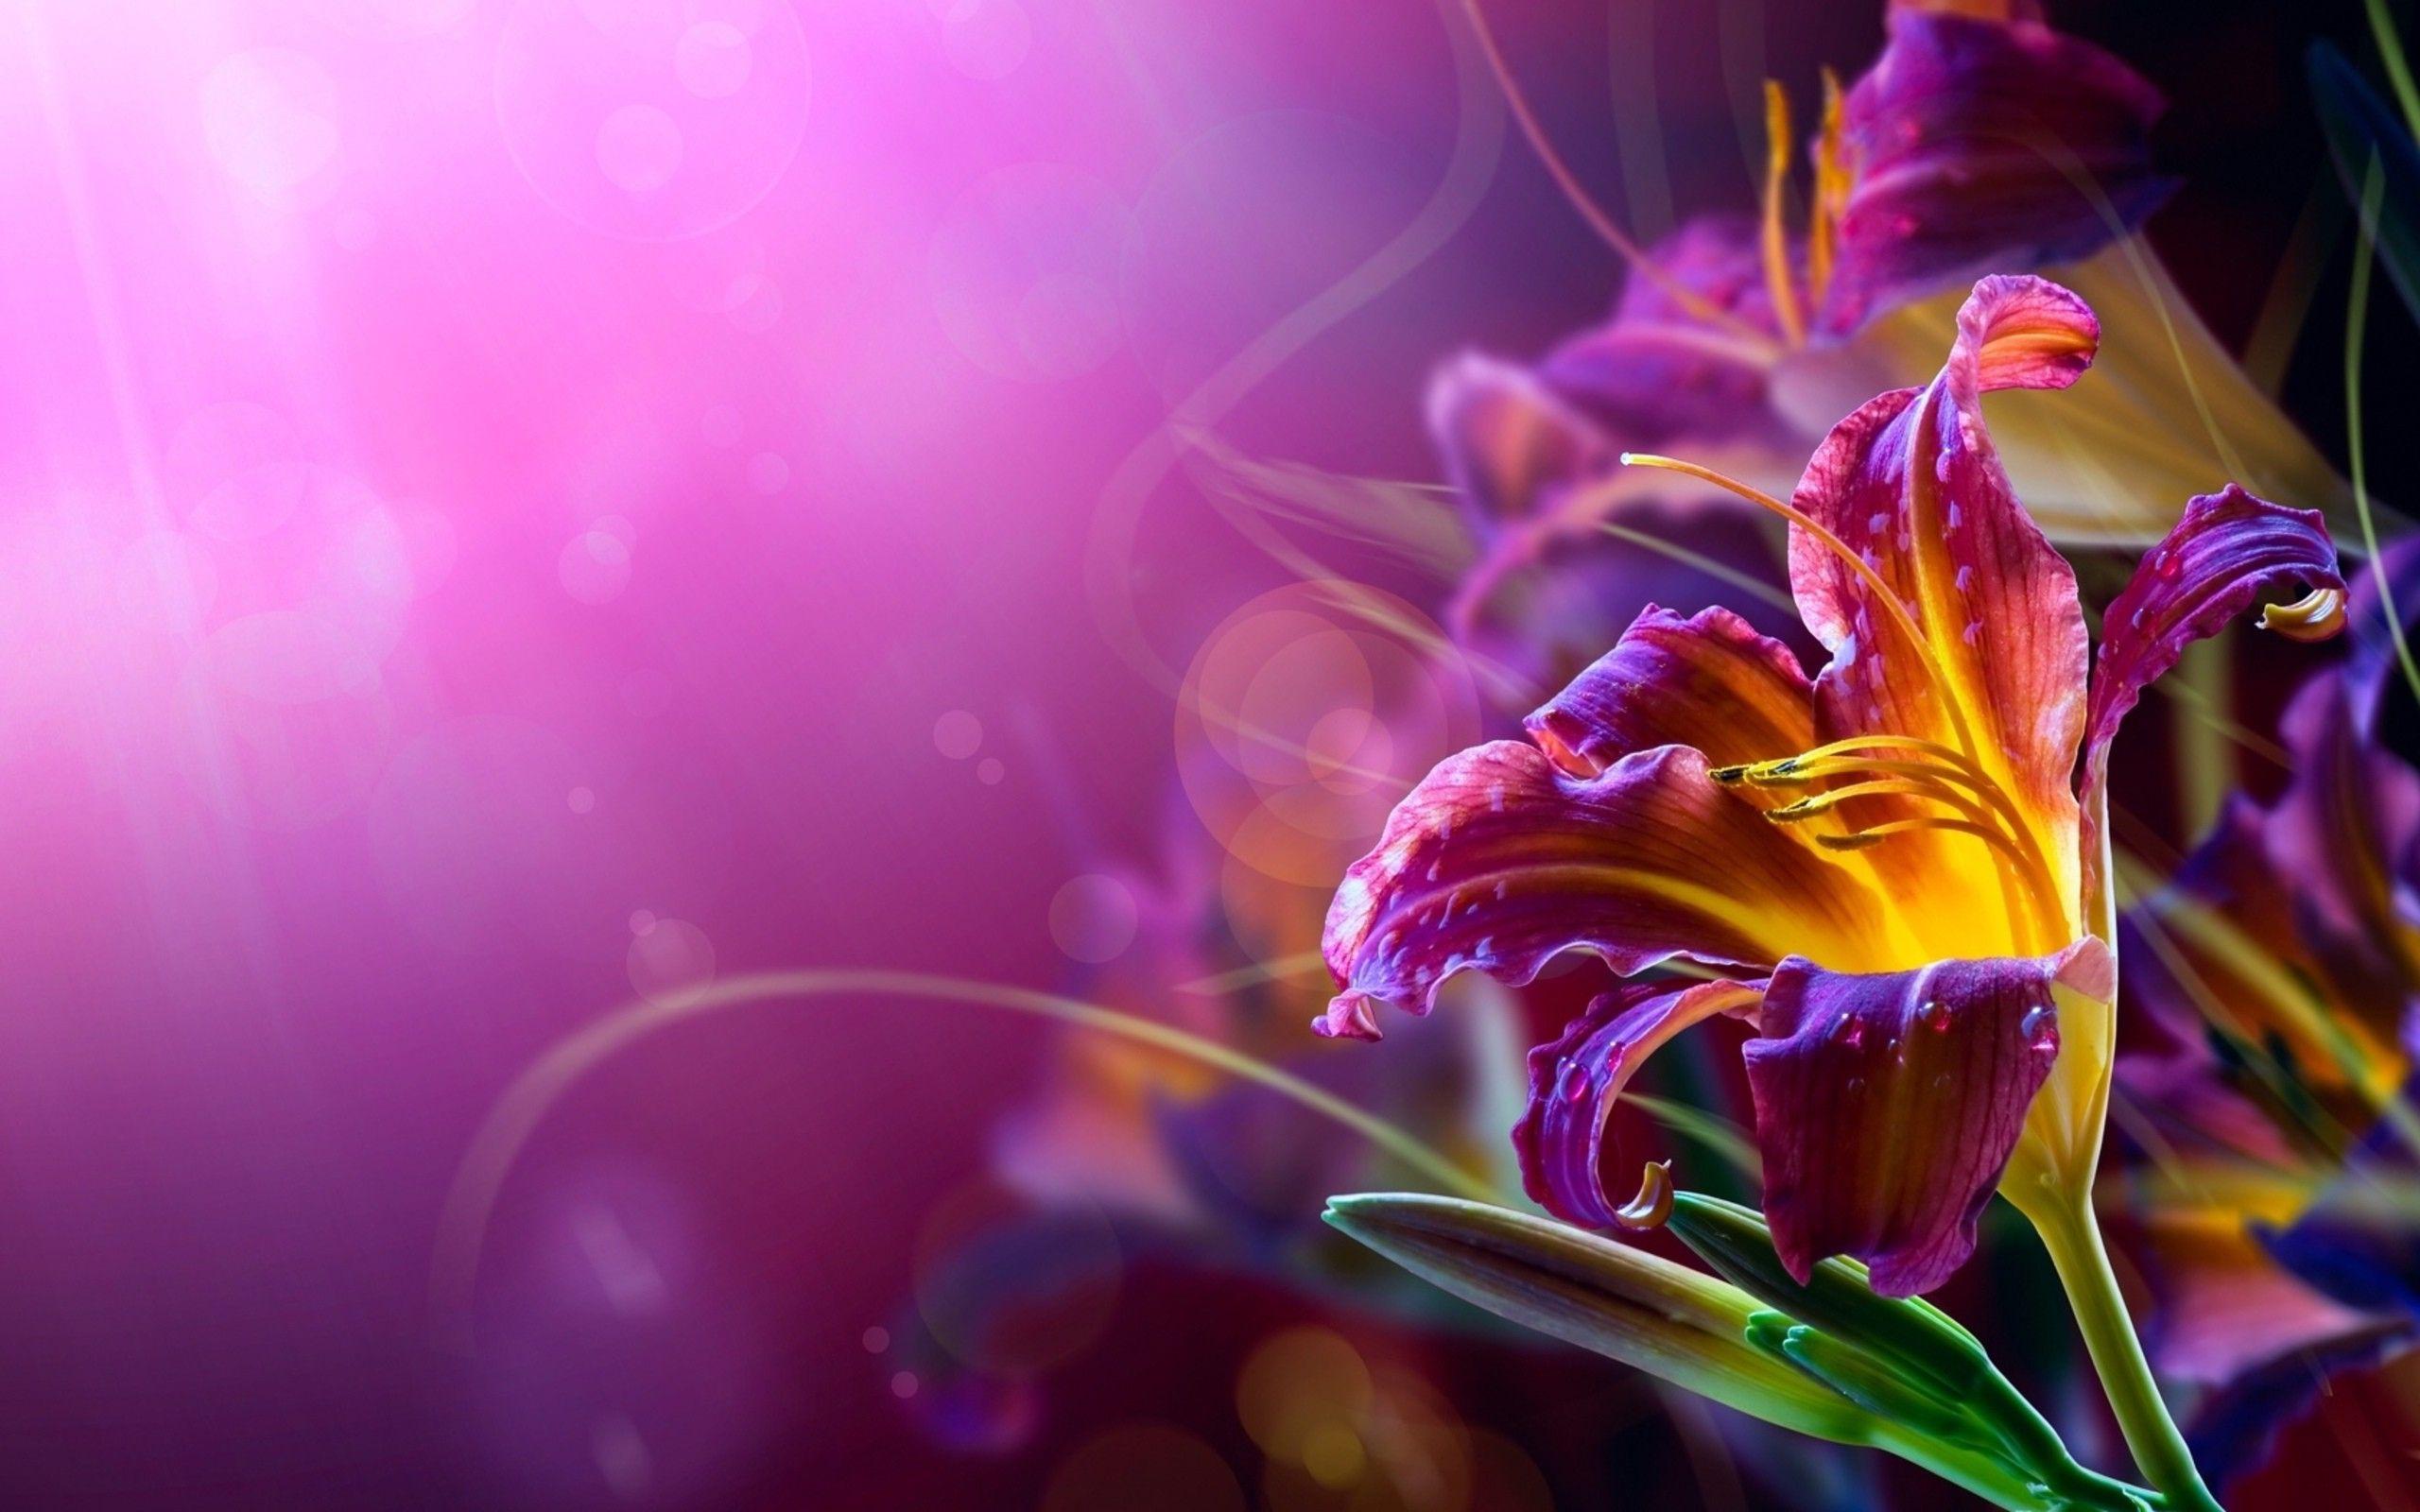 abstract flowers. Flower desktop wallpaper, HD flower wallpaper, Abstract flowers